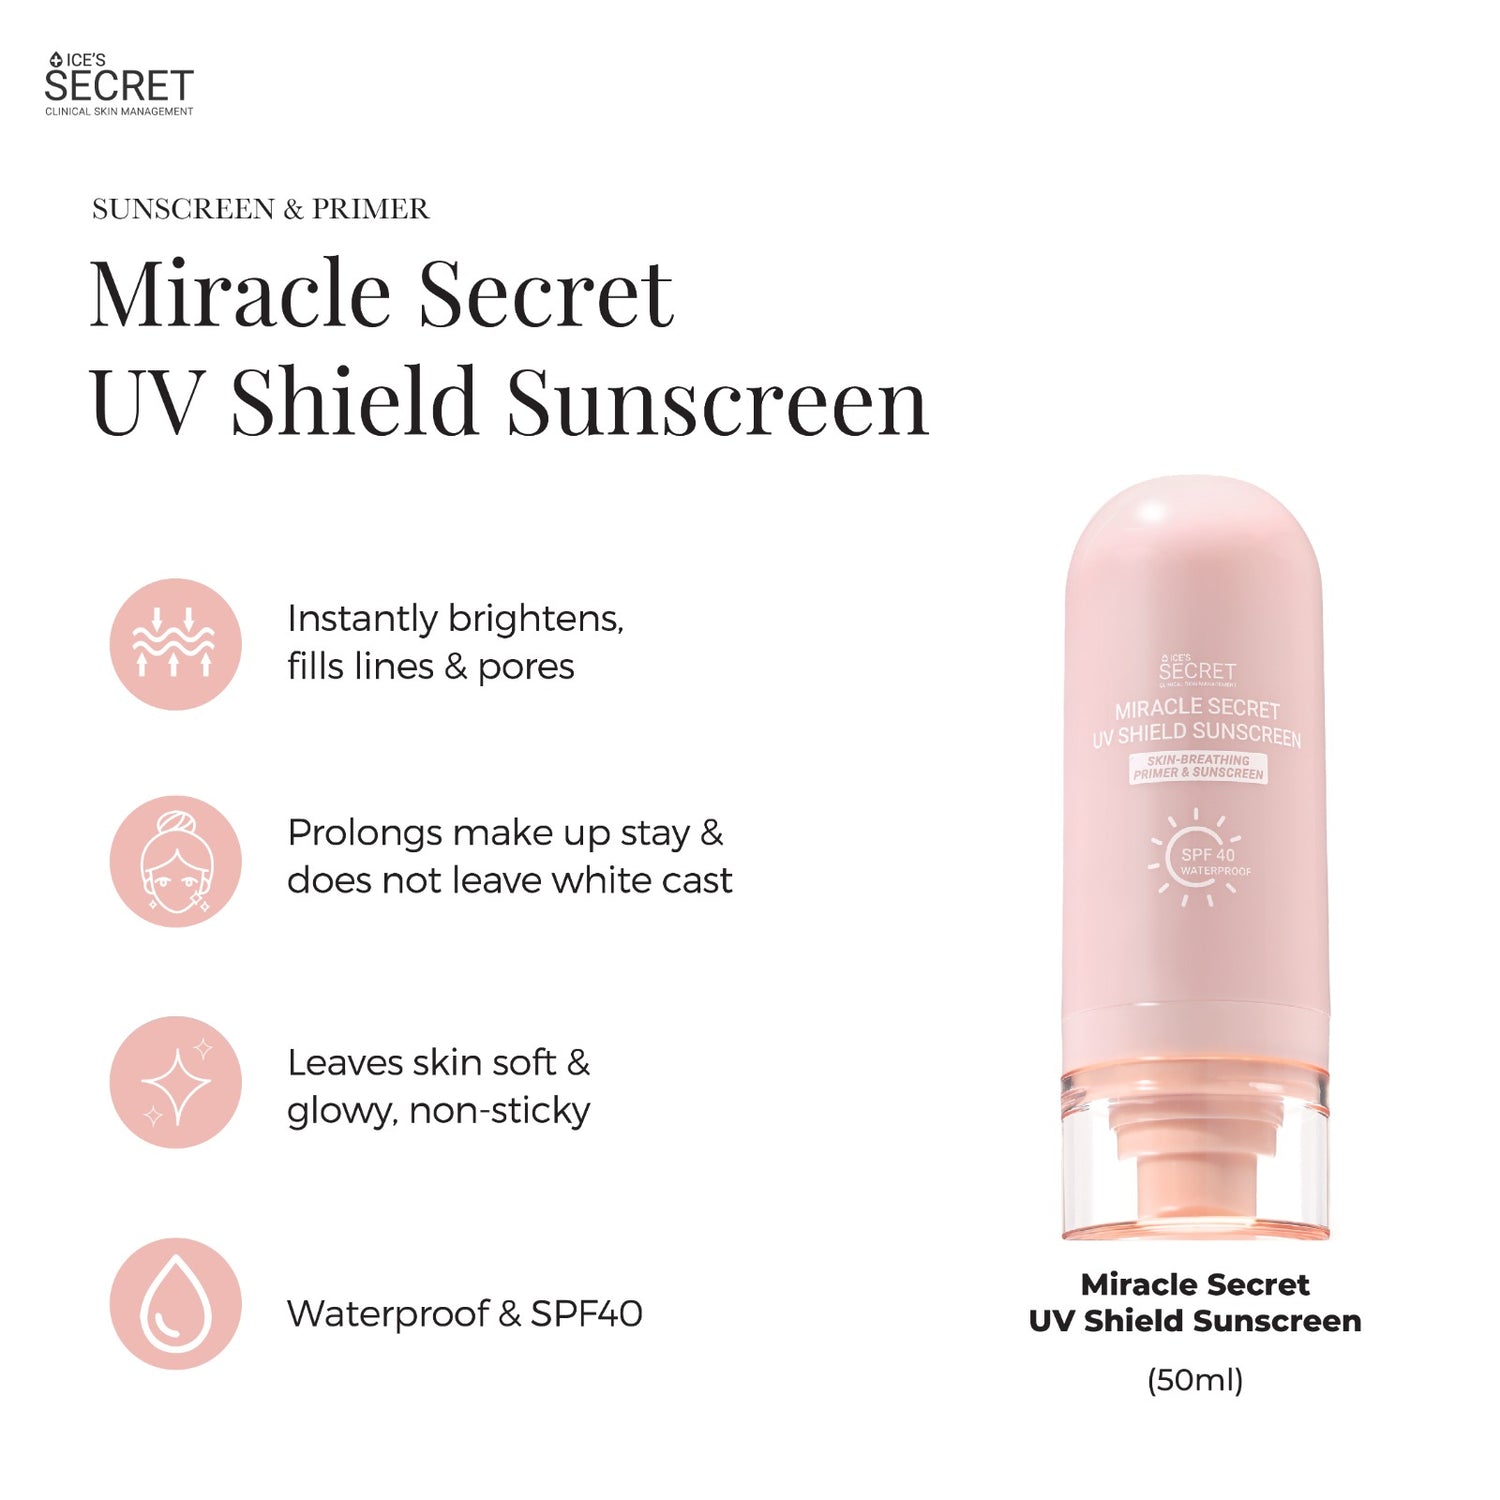 Miracle Secret UV Shield Primer &amp; Sunscreen